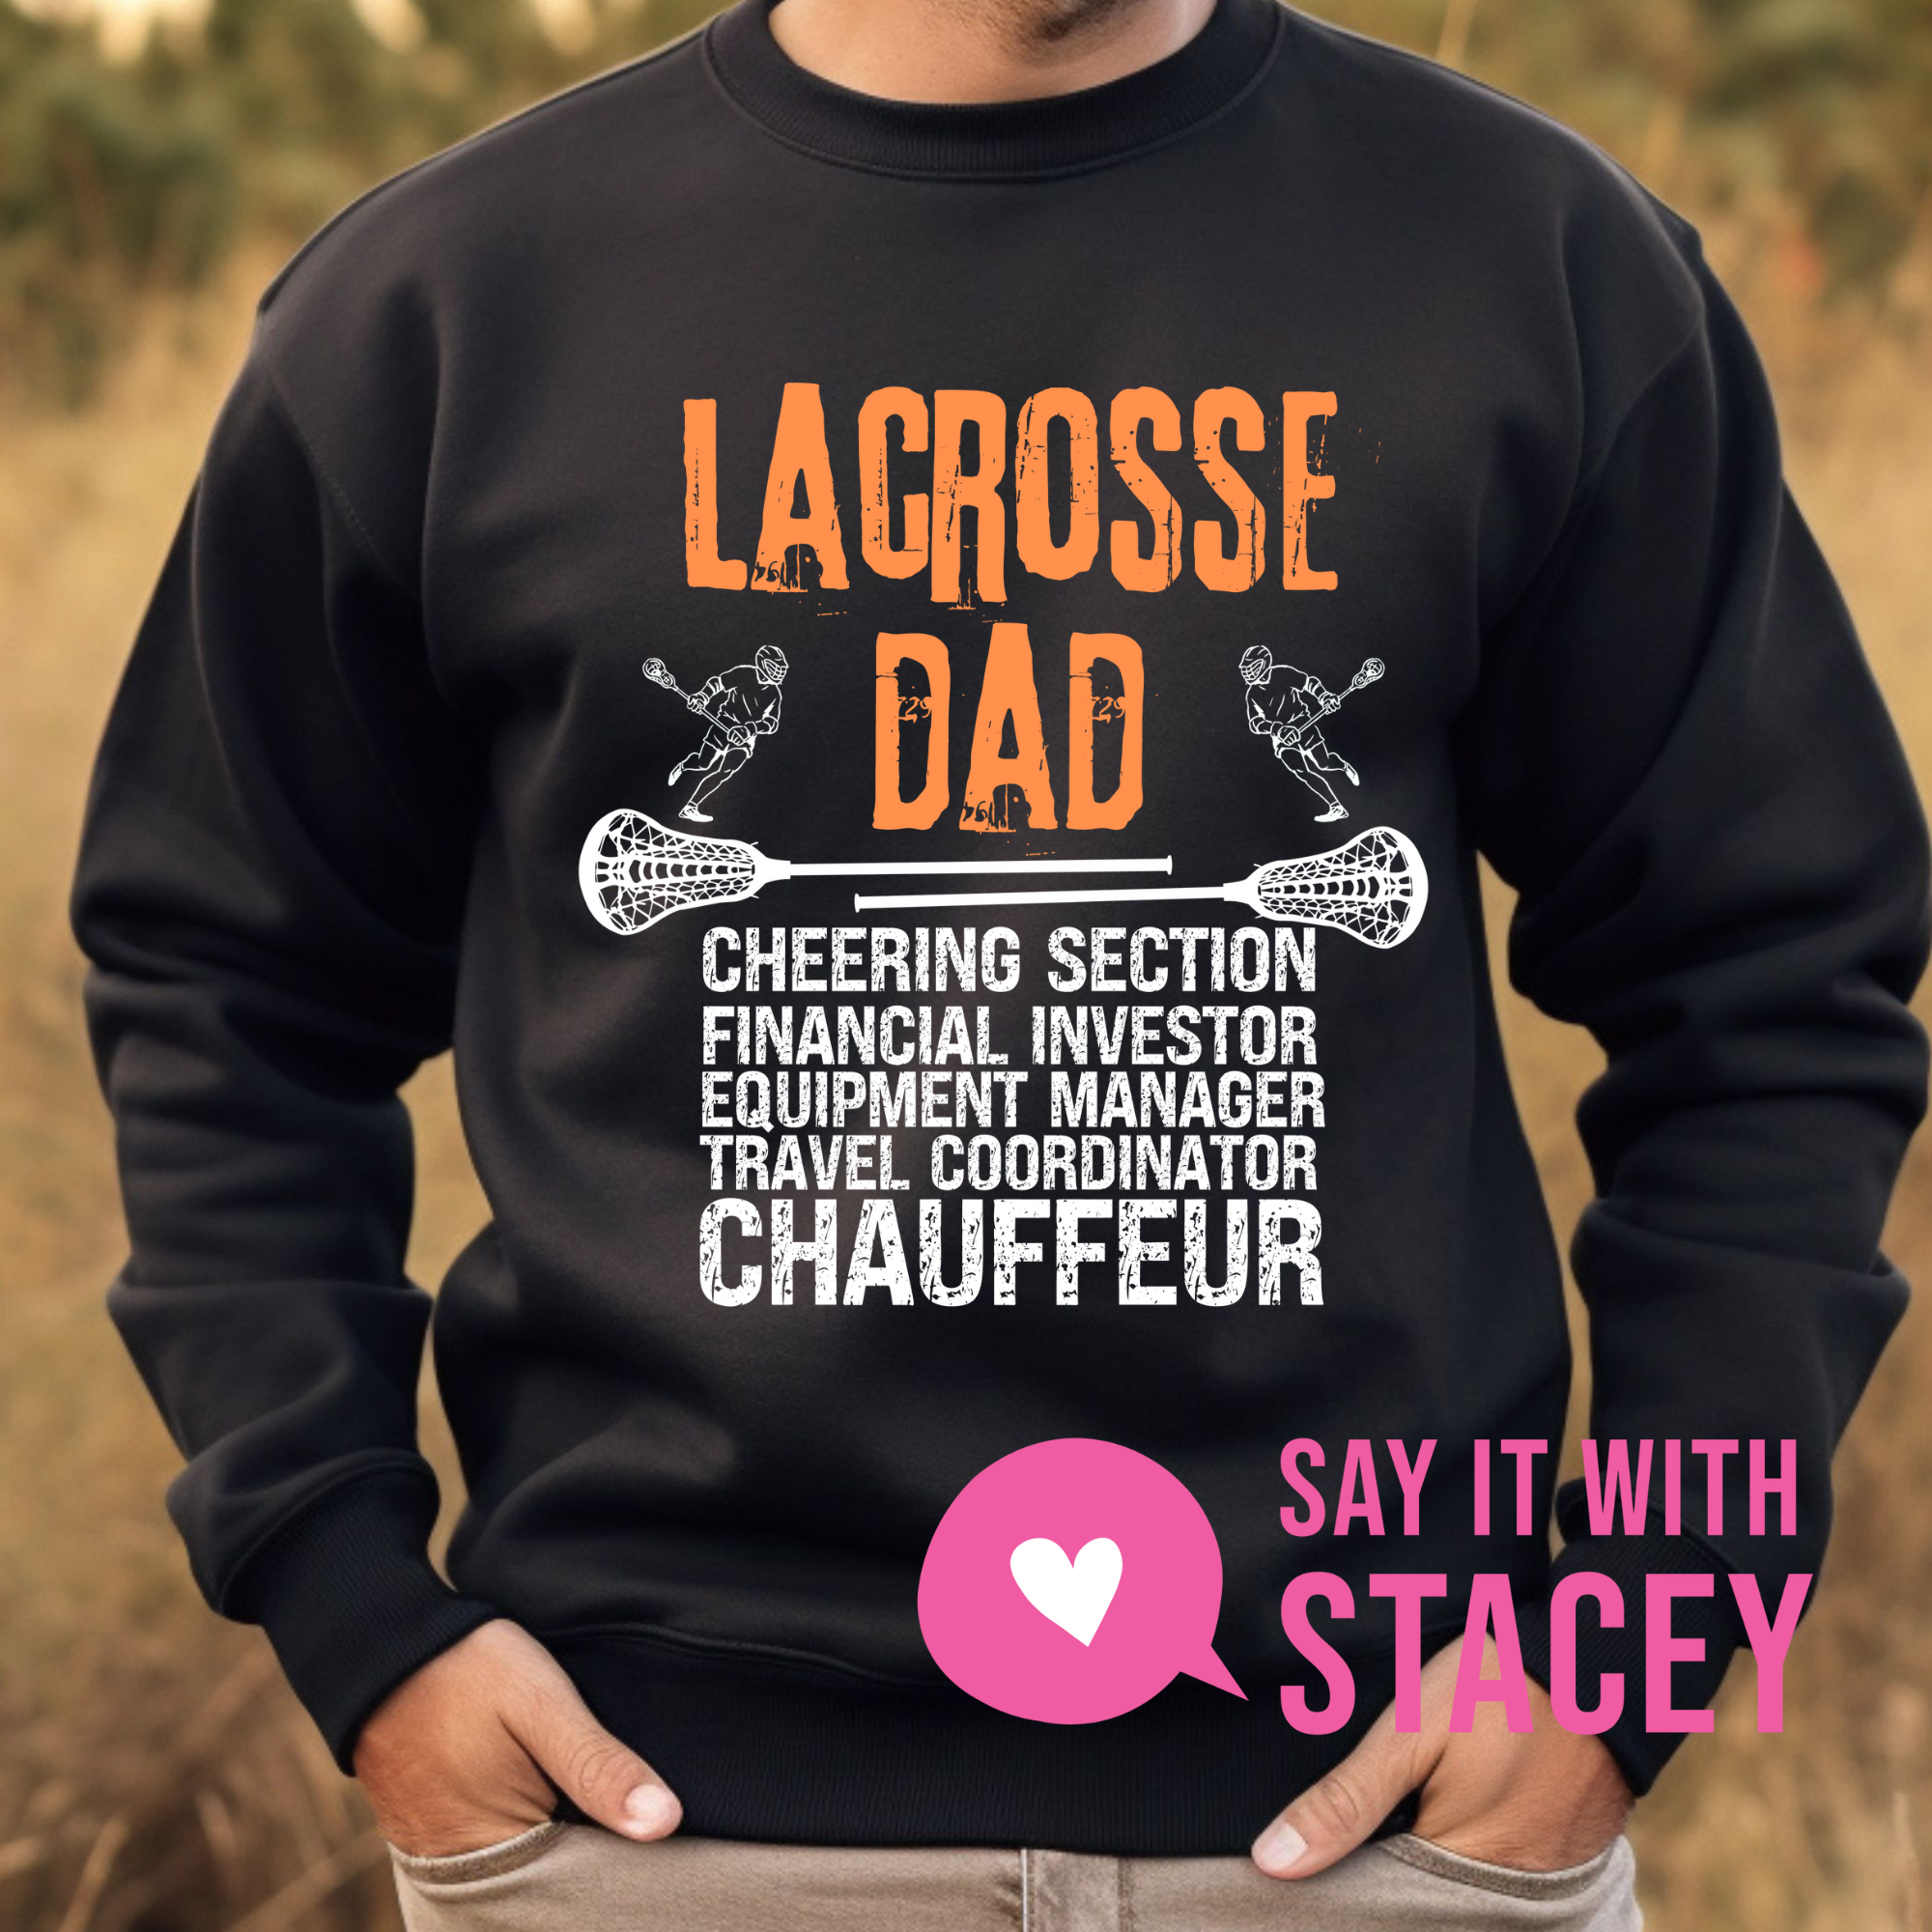 Lacrosse Dad Premium Quality | T-Shirt | Hoodie | Crewneck